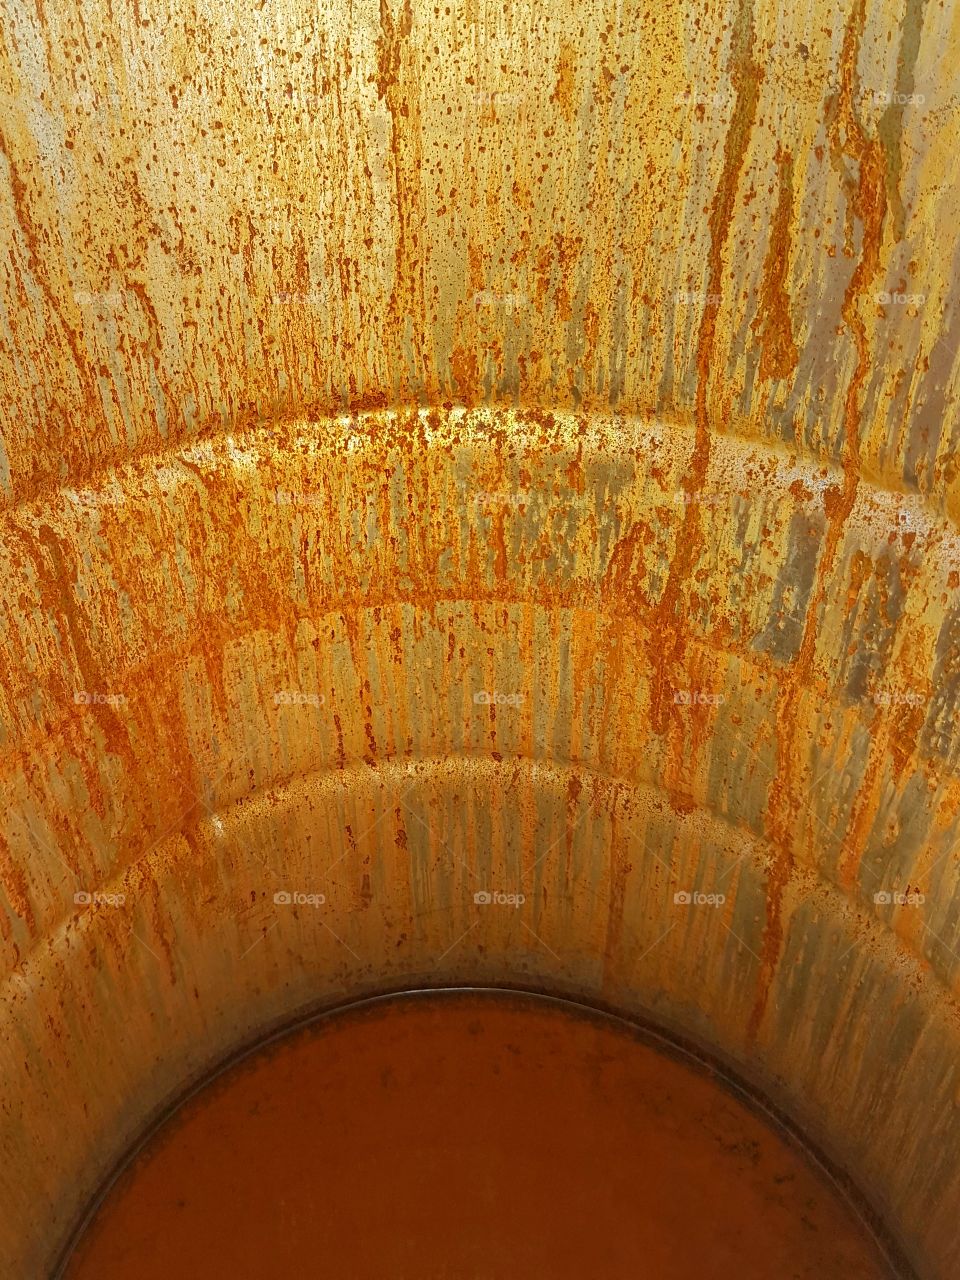 Empty, rusty oil drum.